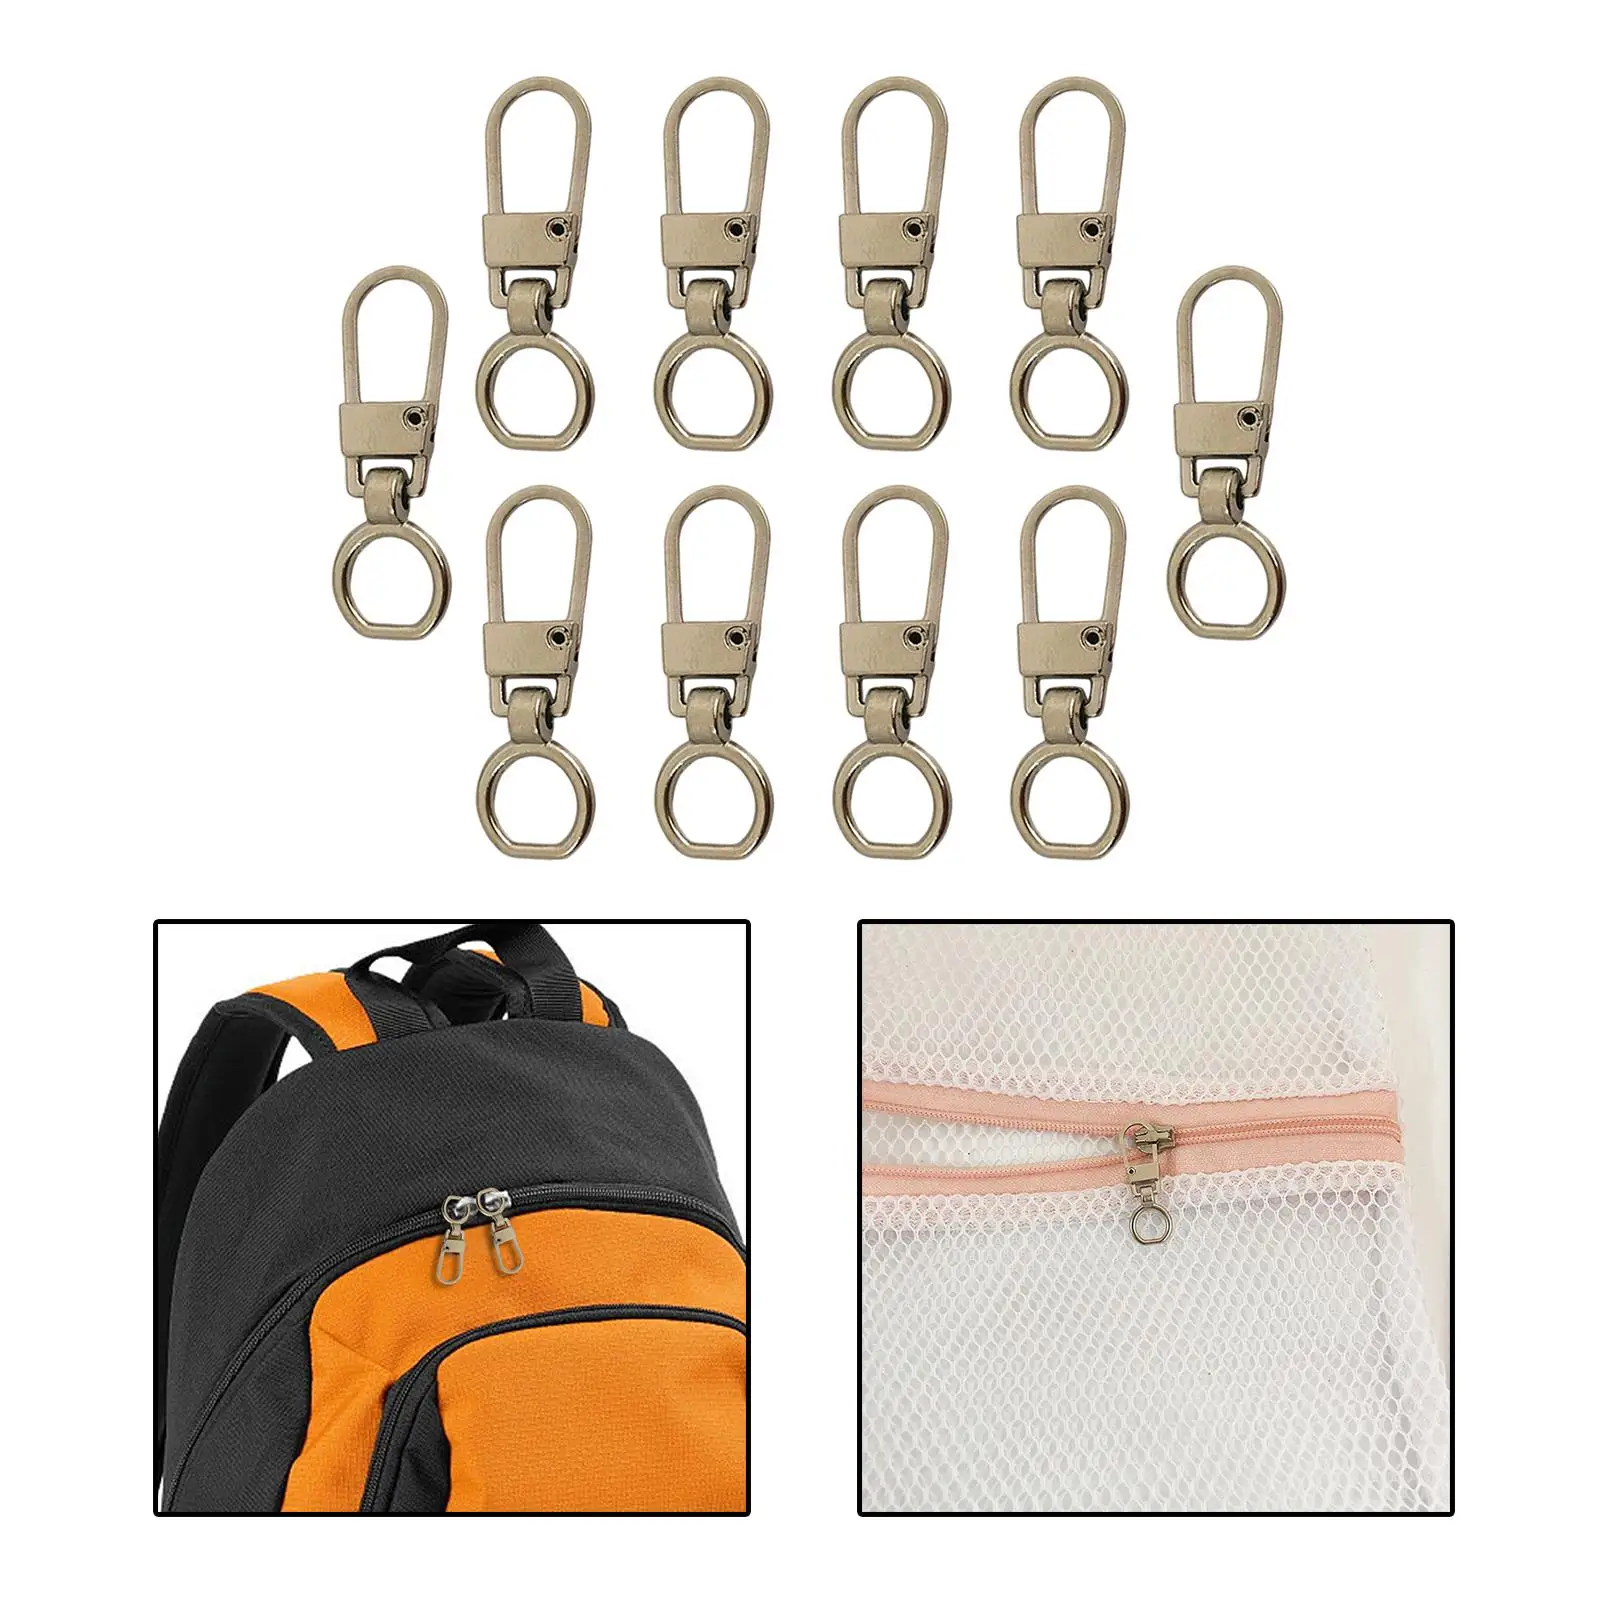 10 Pieces Zipper Pull Tabs Repair Replacement DIY for Bags Handbags Suitcase